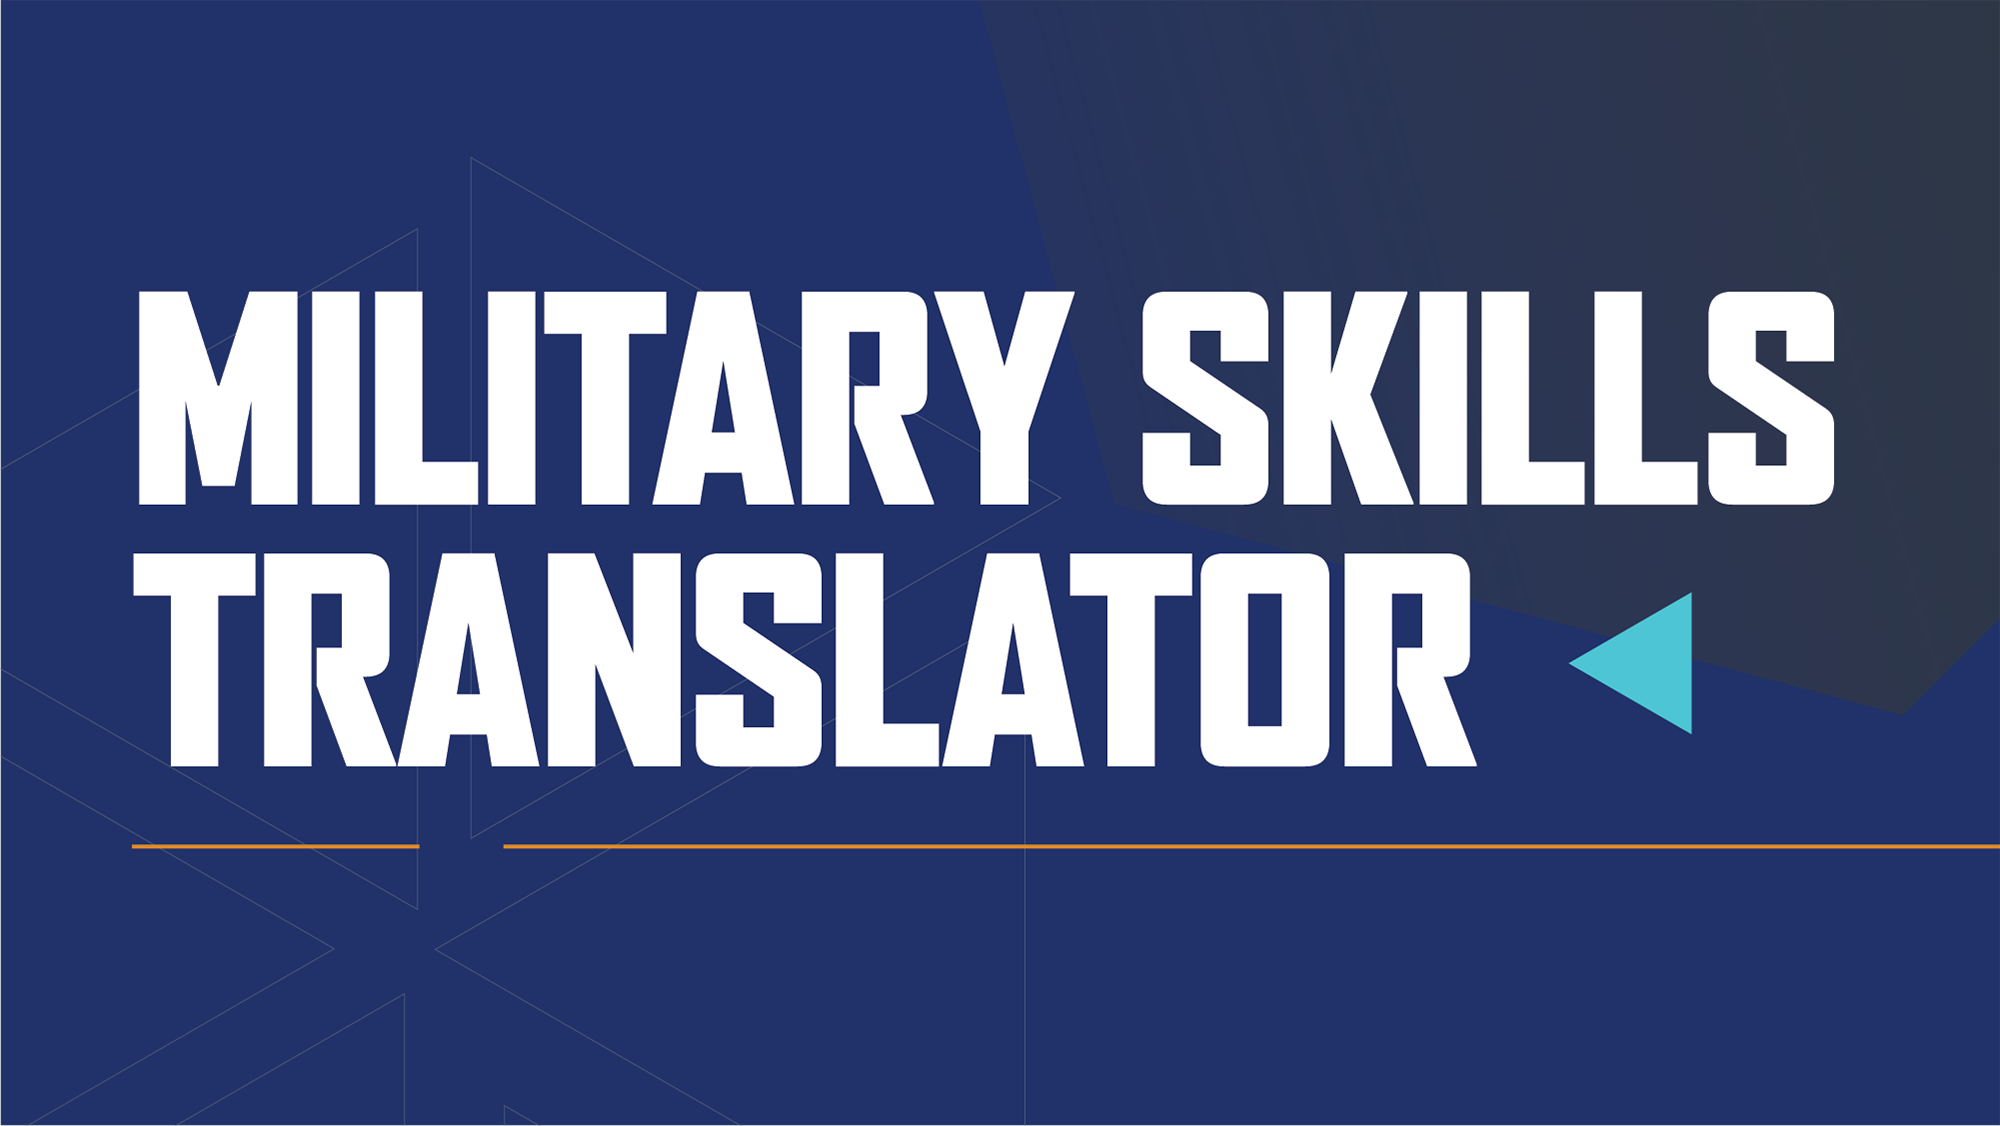 Military Skills Translator